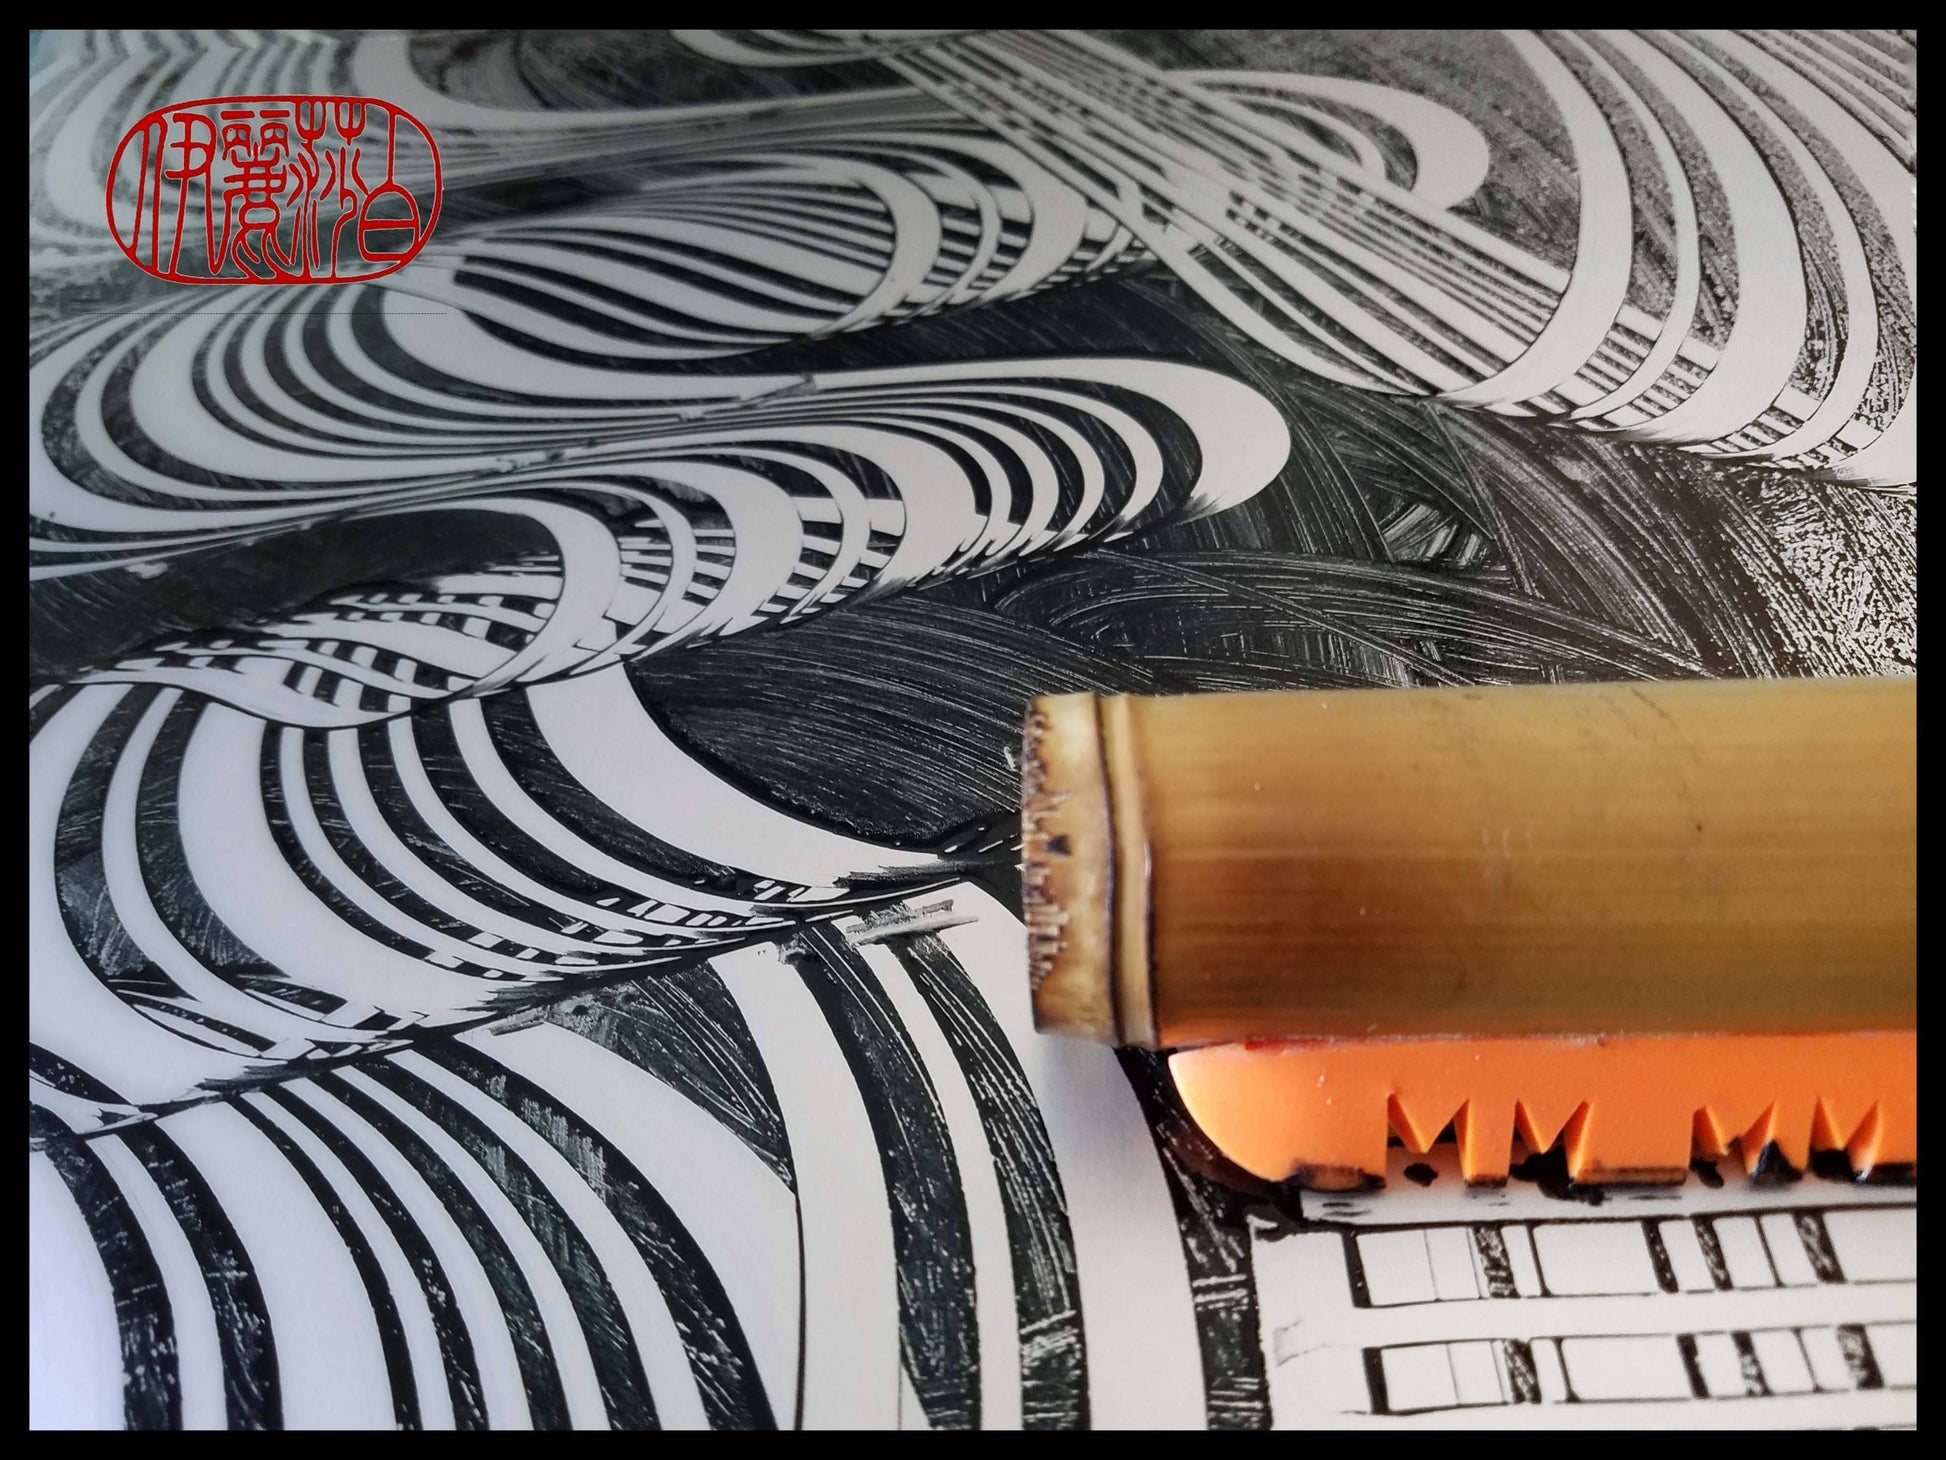 ESA Silicone Blade Mark Making Tool For Encaustic Hot Box - Elizabeth Schowachert Art